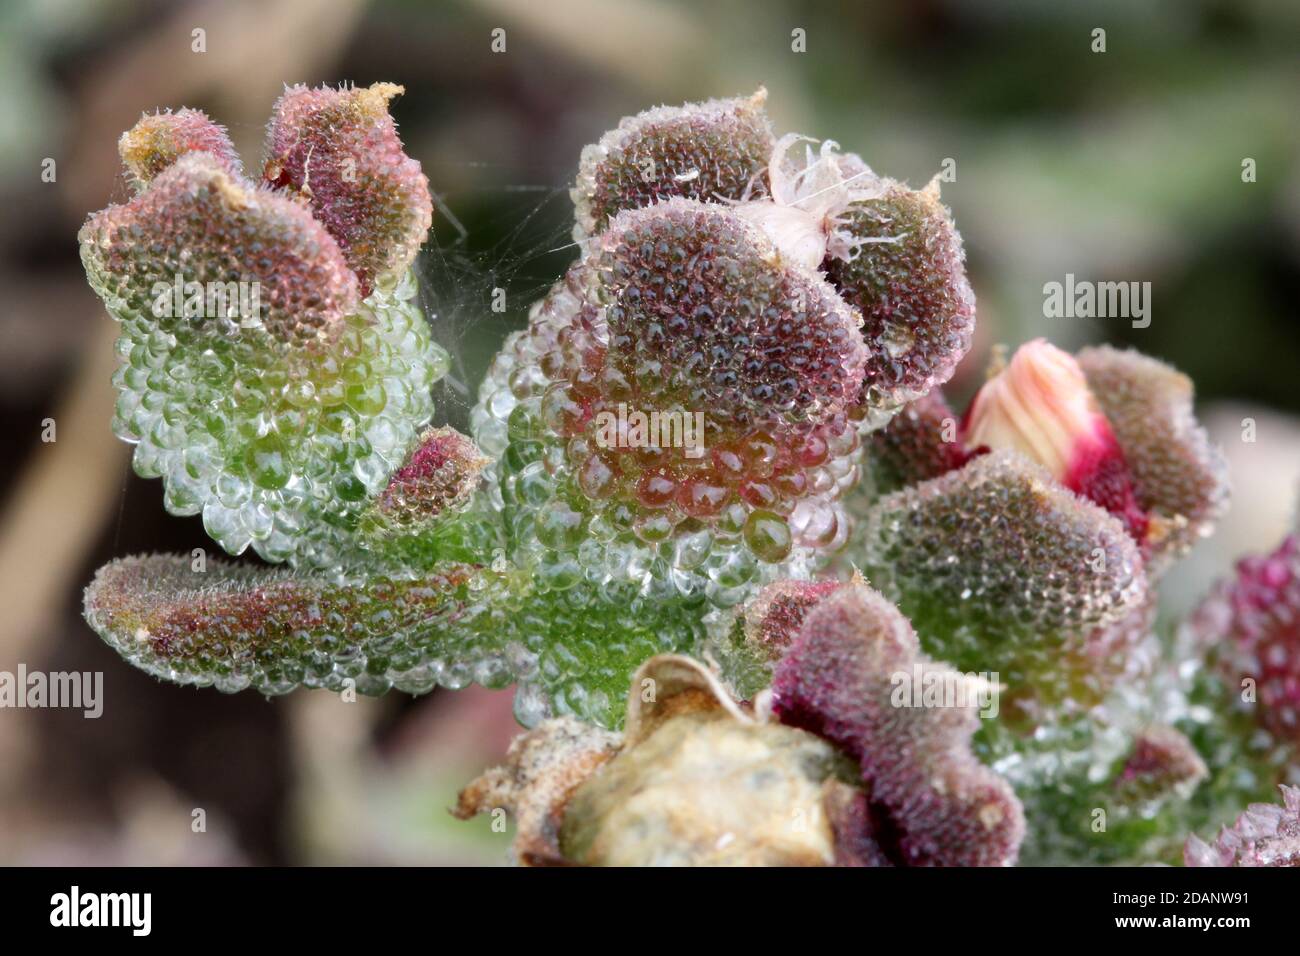 Kristallmittagsblume mesembryanthemum crystallinum Stock Photo